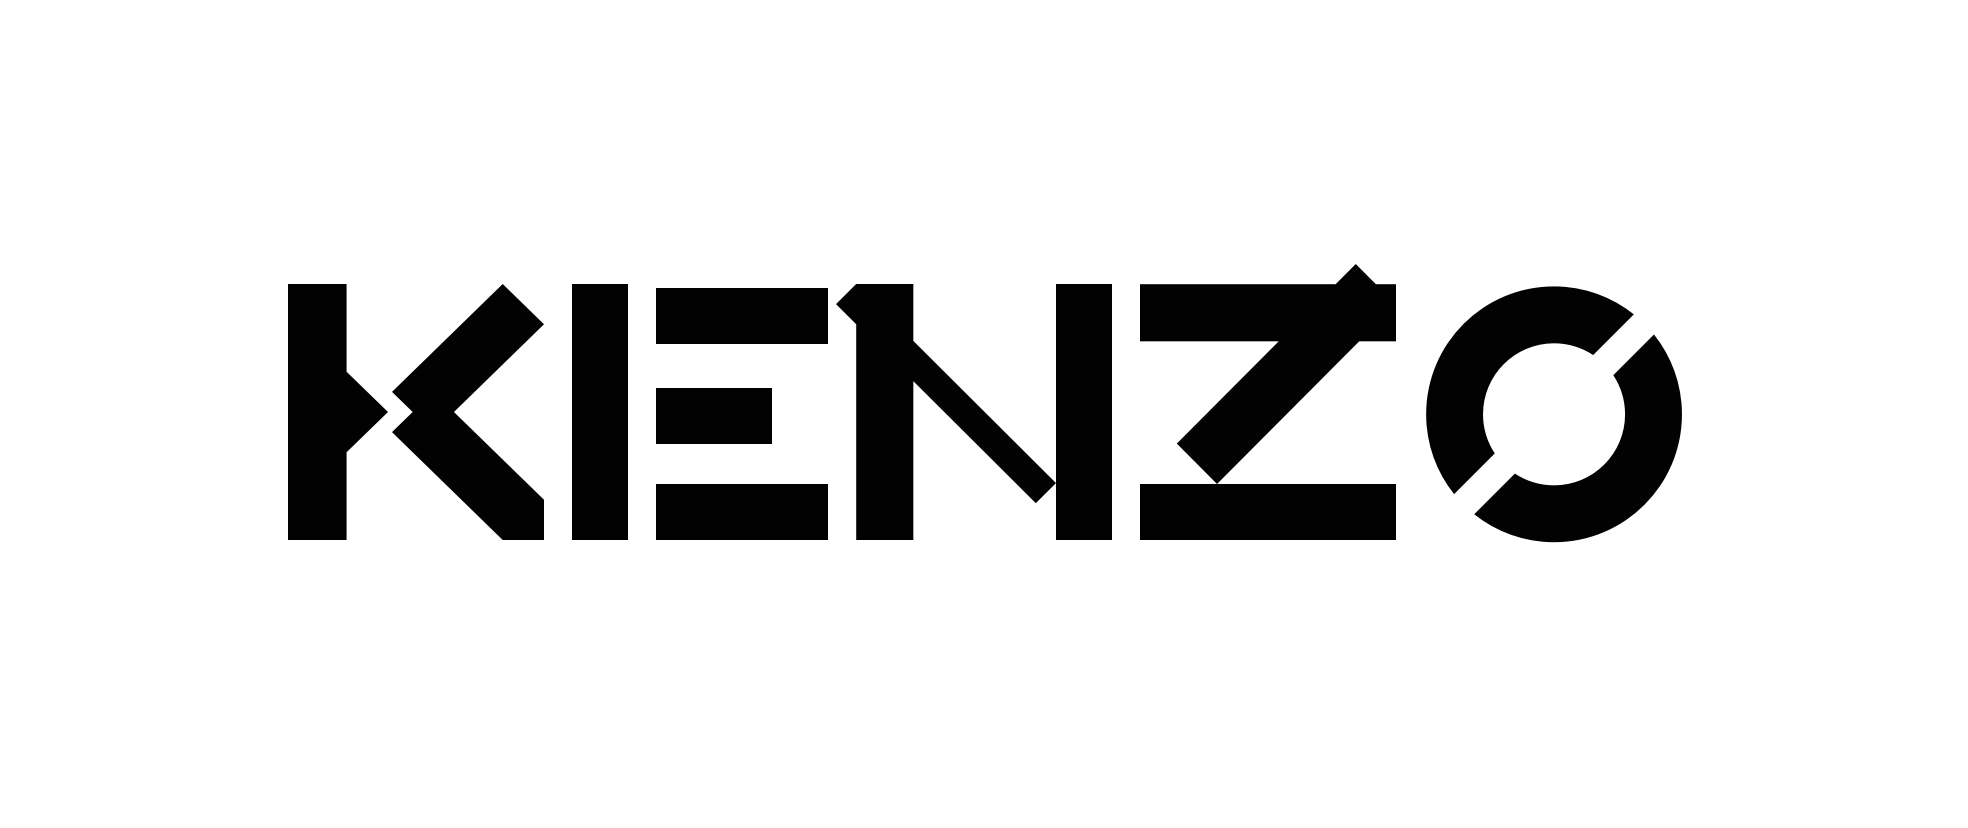 Kenzo Brand Logo